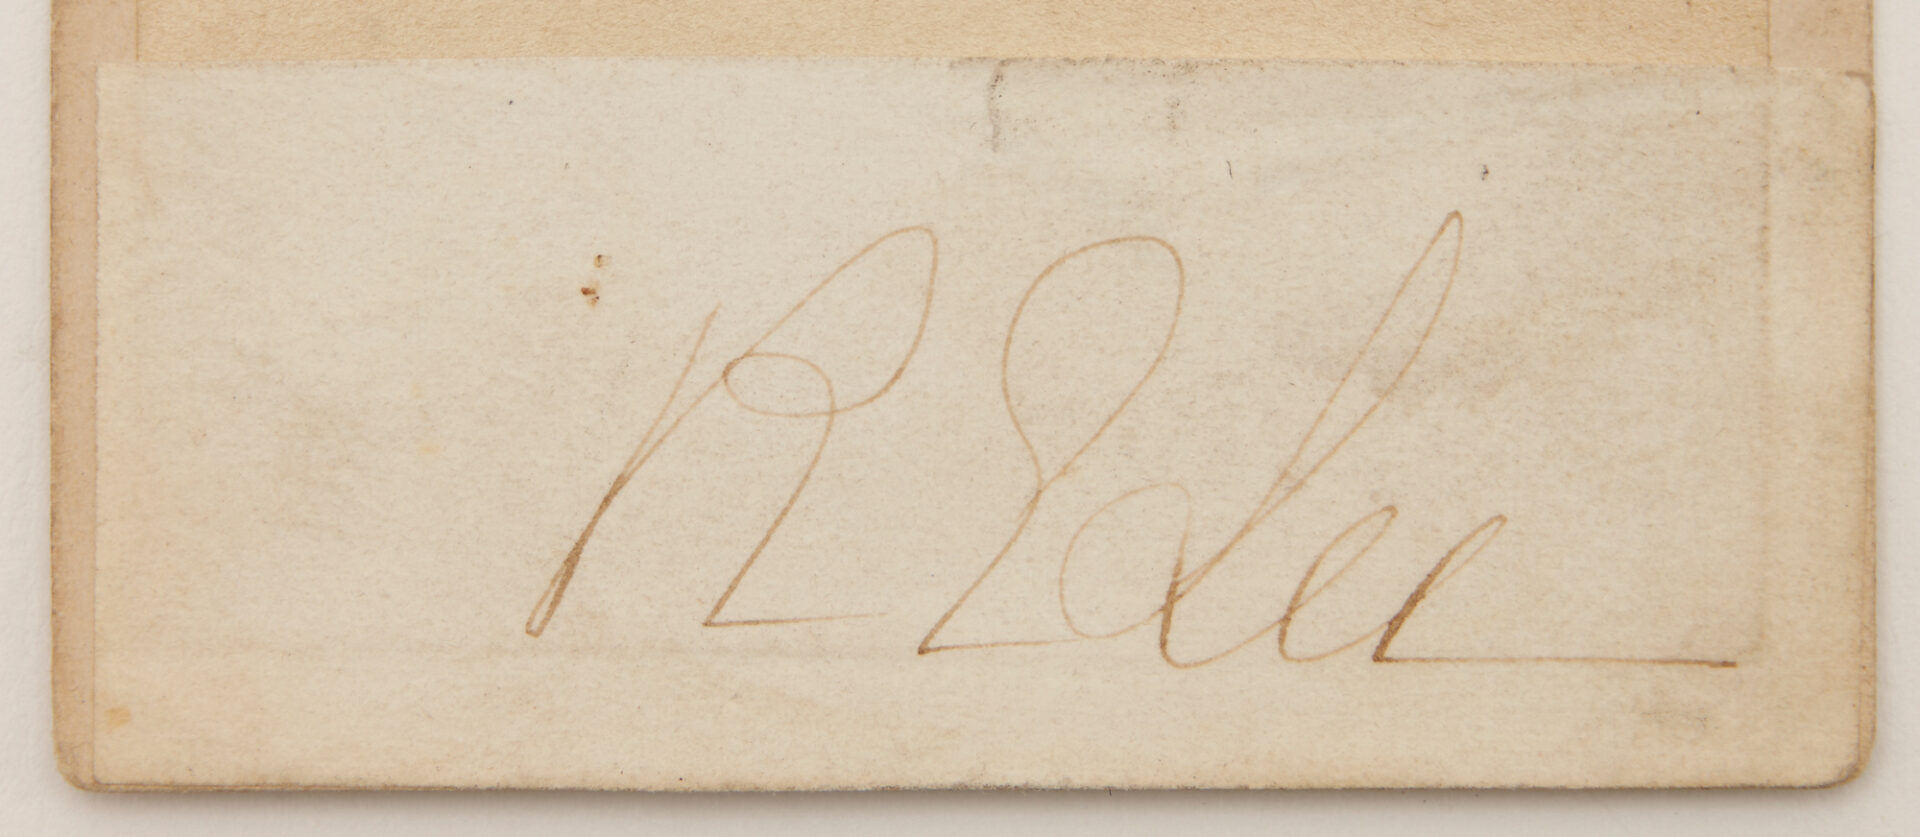 Lot 647: Robert E. Lee Signed CDV, Traveller & Lee CDV by Plecker, 2 items